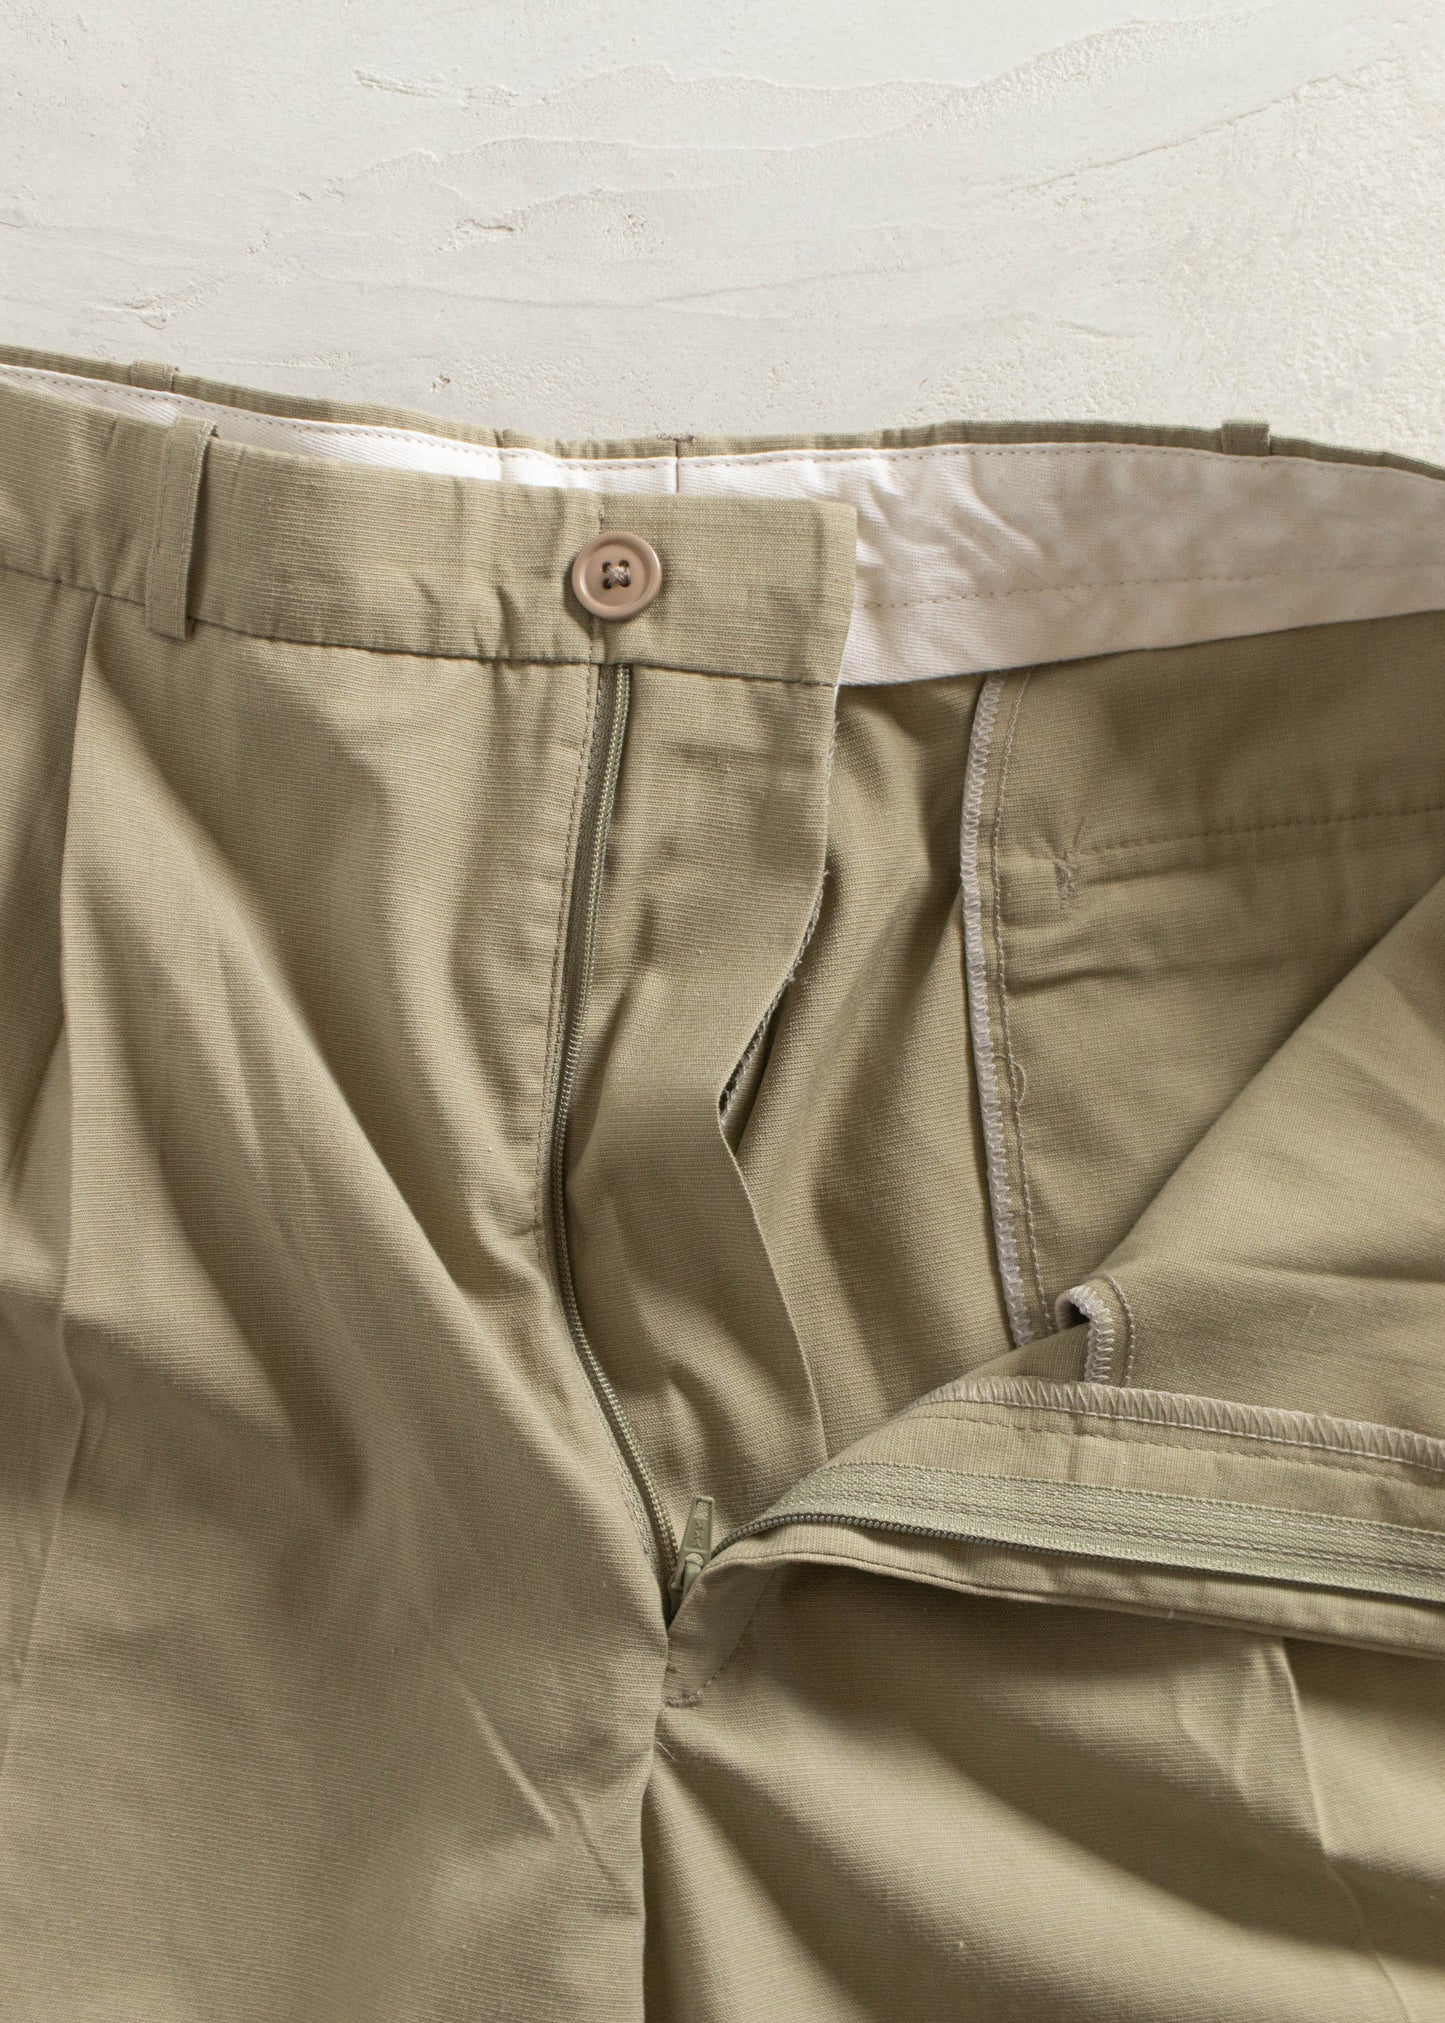 Vintage Military Trouser Shorts Size Women's 33 Men's 36